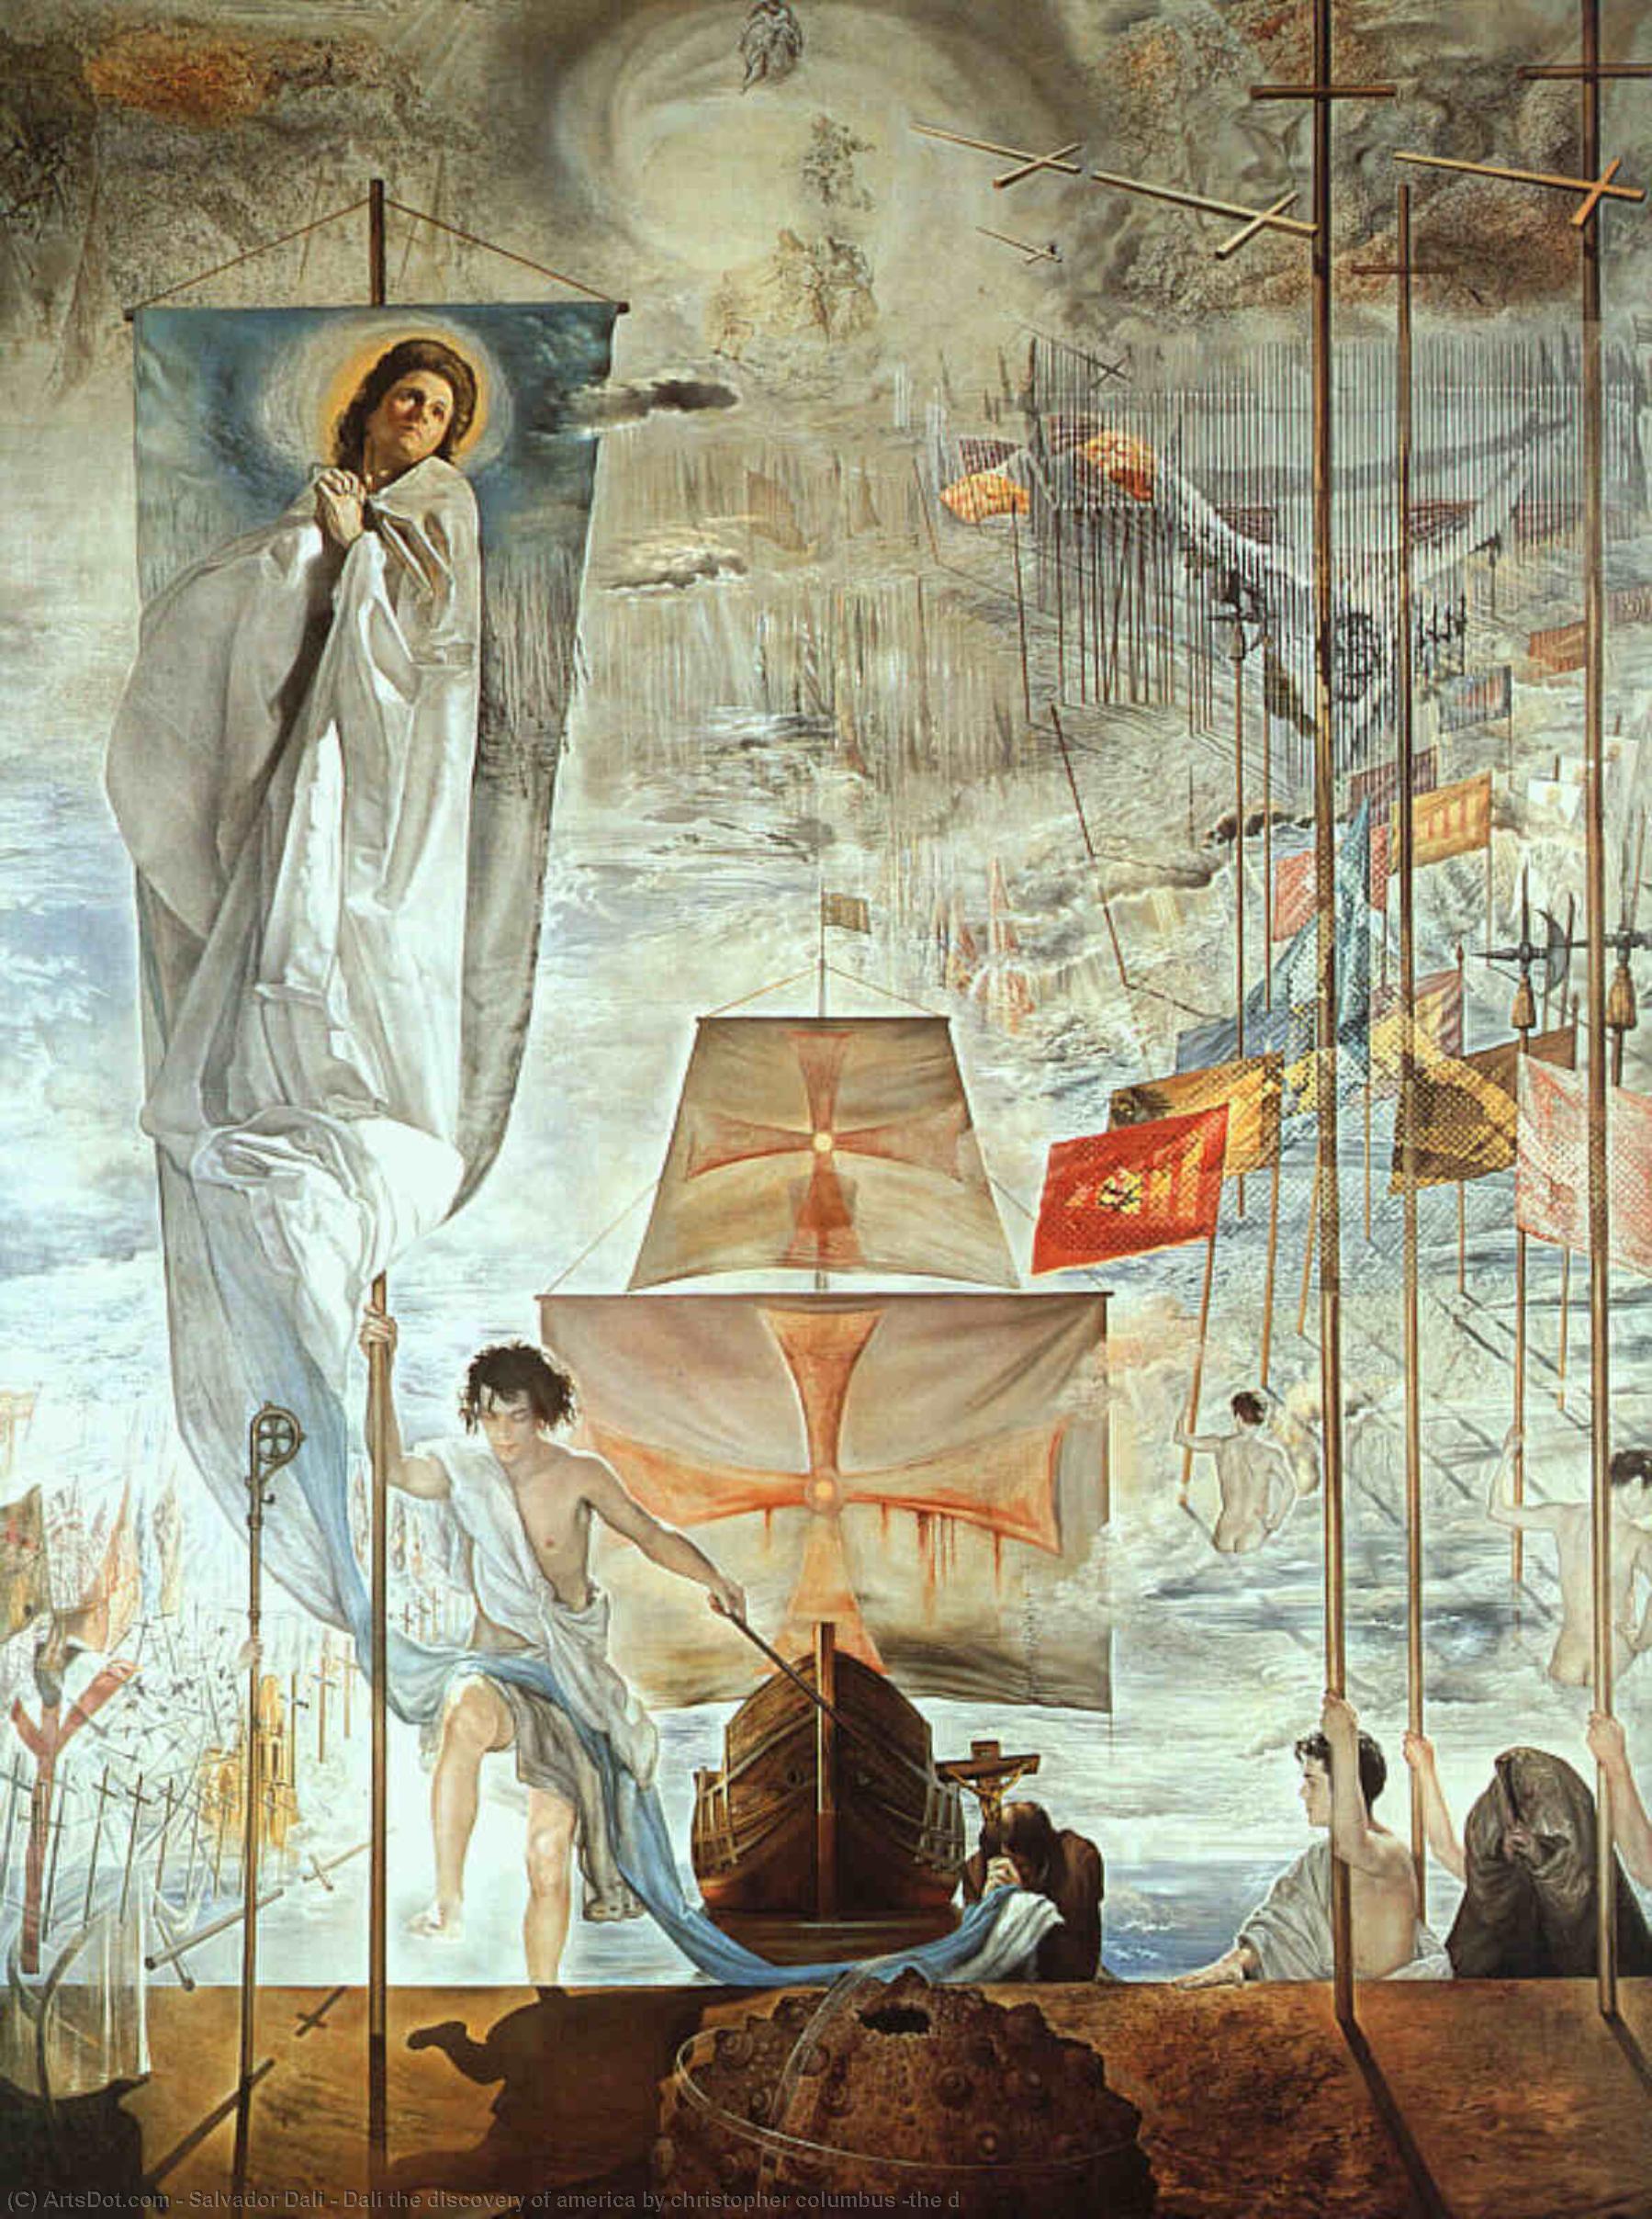 Wikoo.org - موسوعة الفنون الجميلة - اللوحة، العمل الفني Salvador Dali - Dalí the discovery of america by christopher columbus (the d